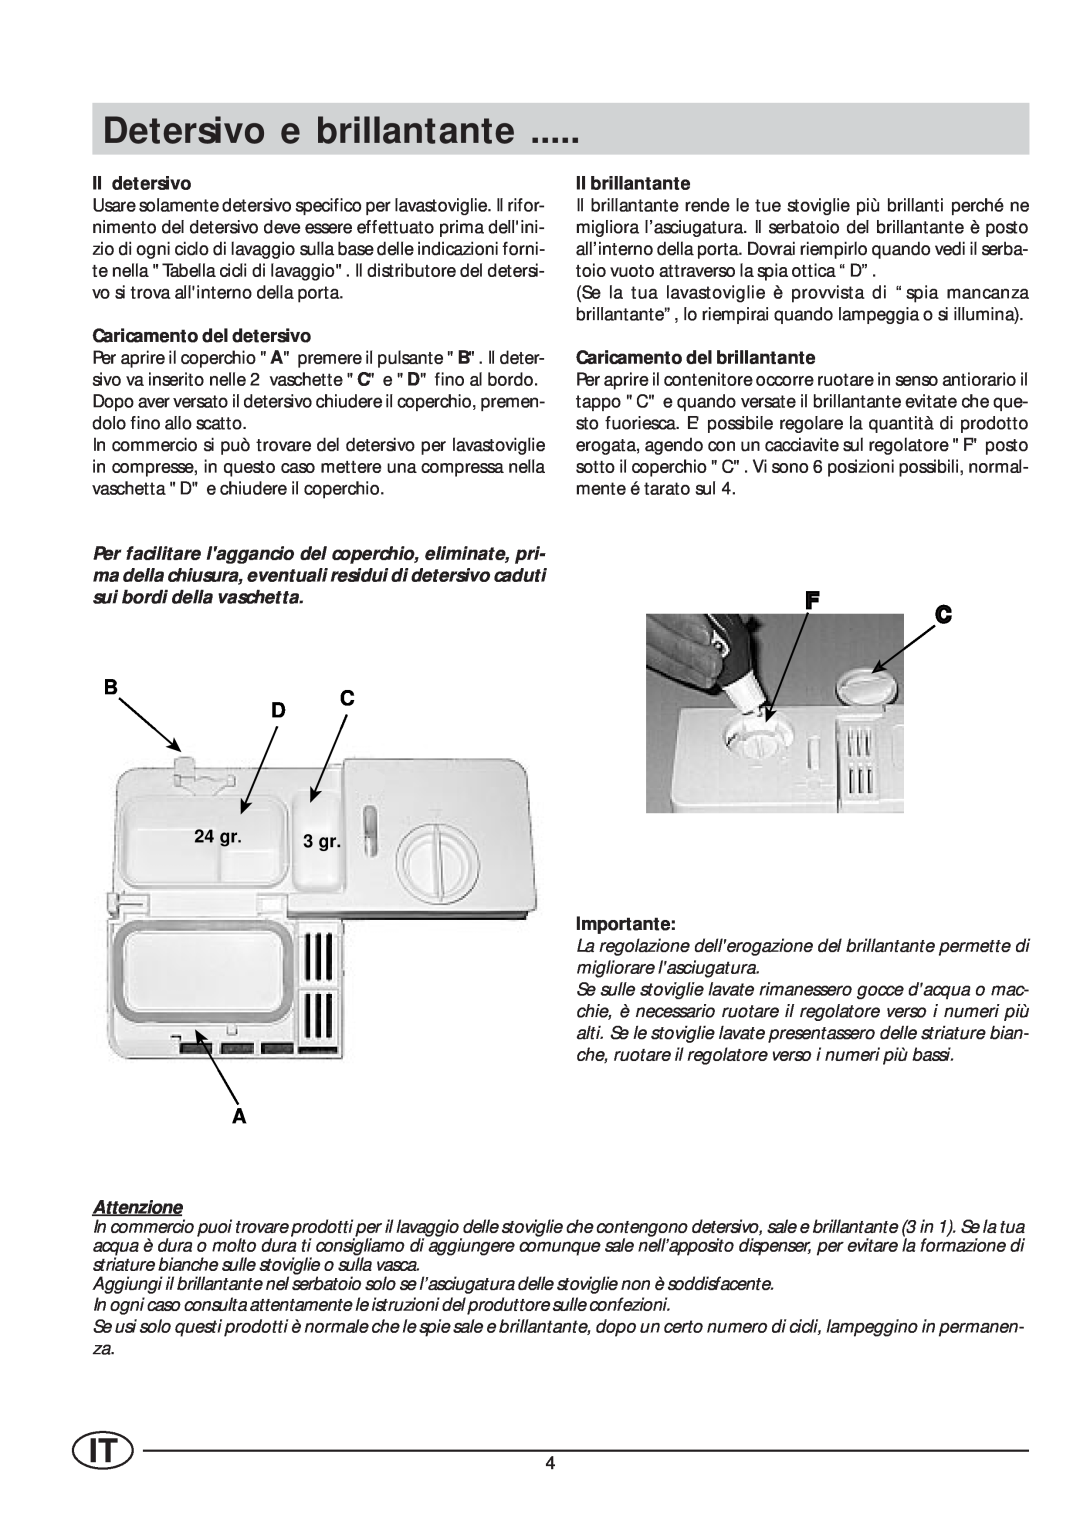 Indesit IDE 45 manual Detersivo e brillantante, Bc D, Il detersivo, Caricamento del detersivo, Il brillantante, 24 gr, 3 gr 